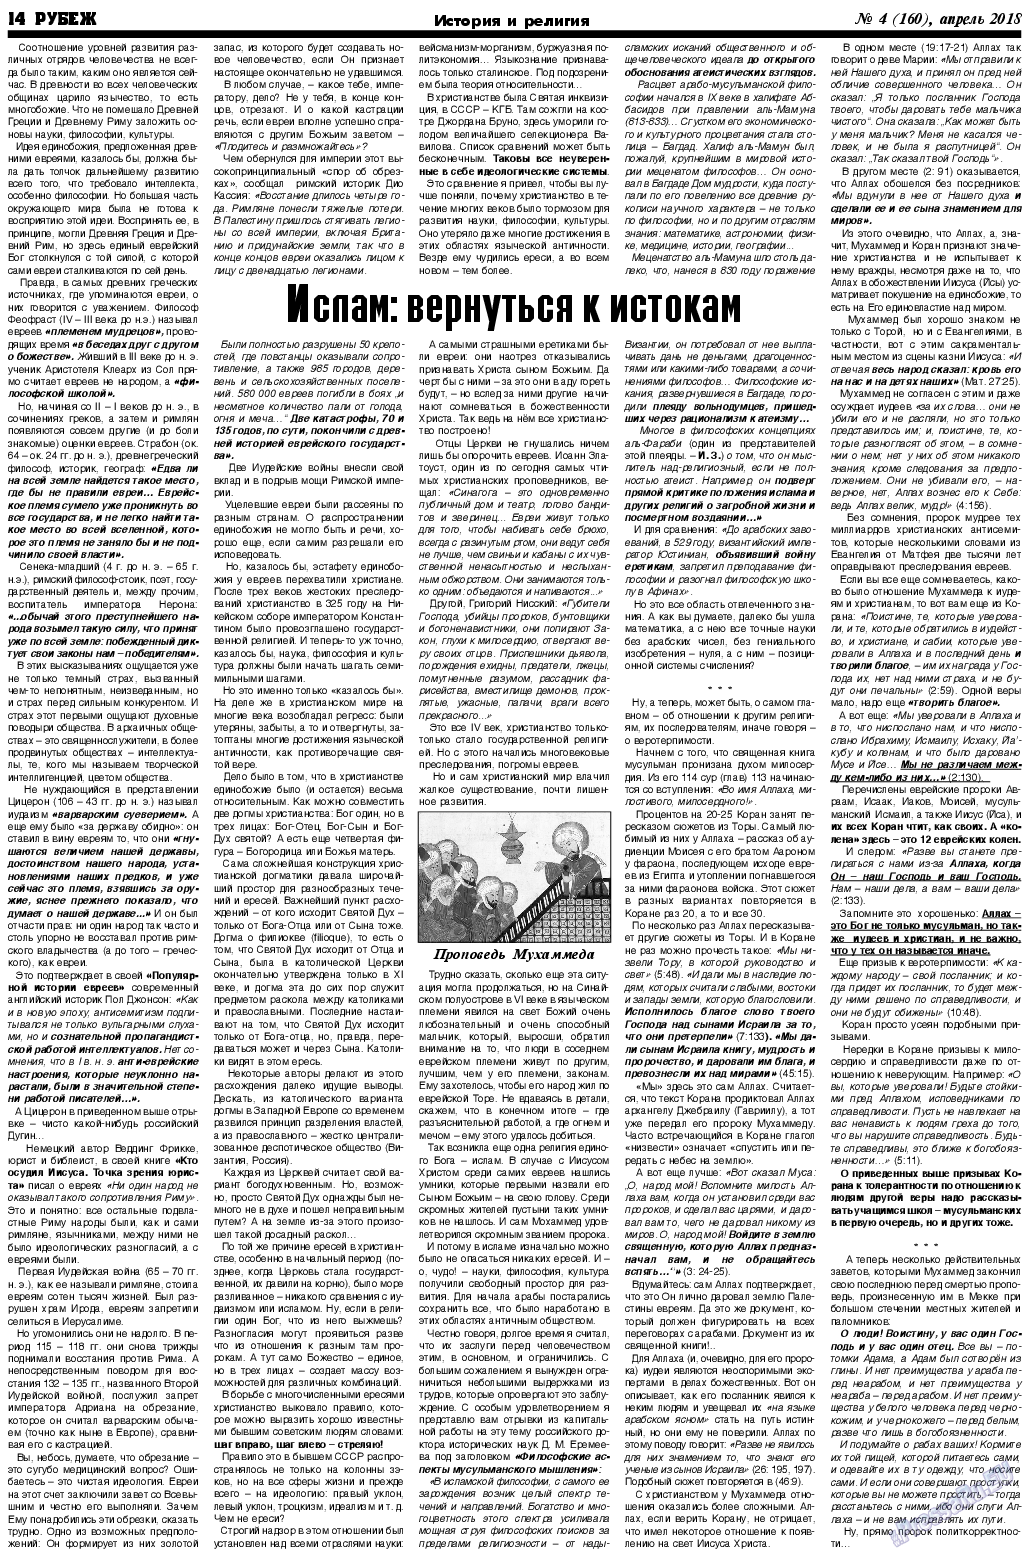 Рубеж, газета. 2018 №4 стр.14